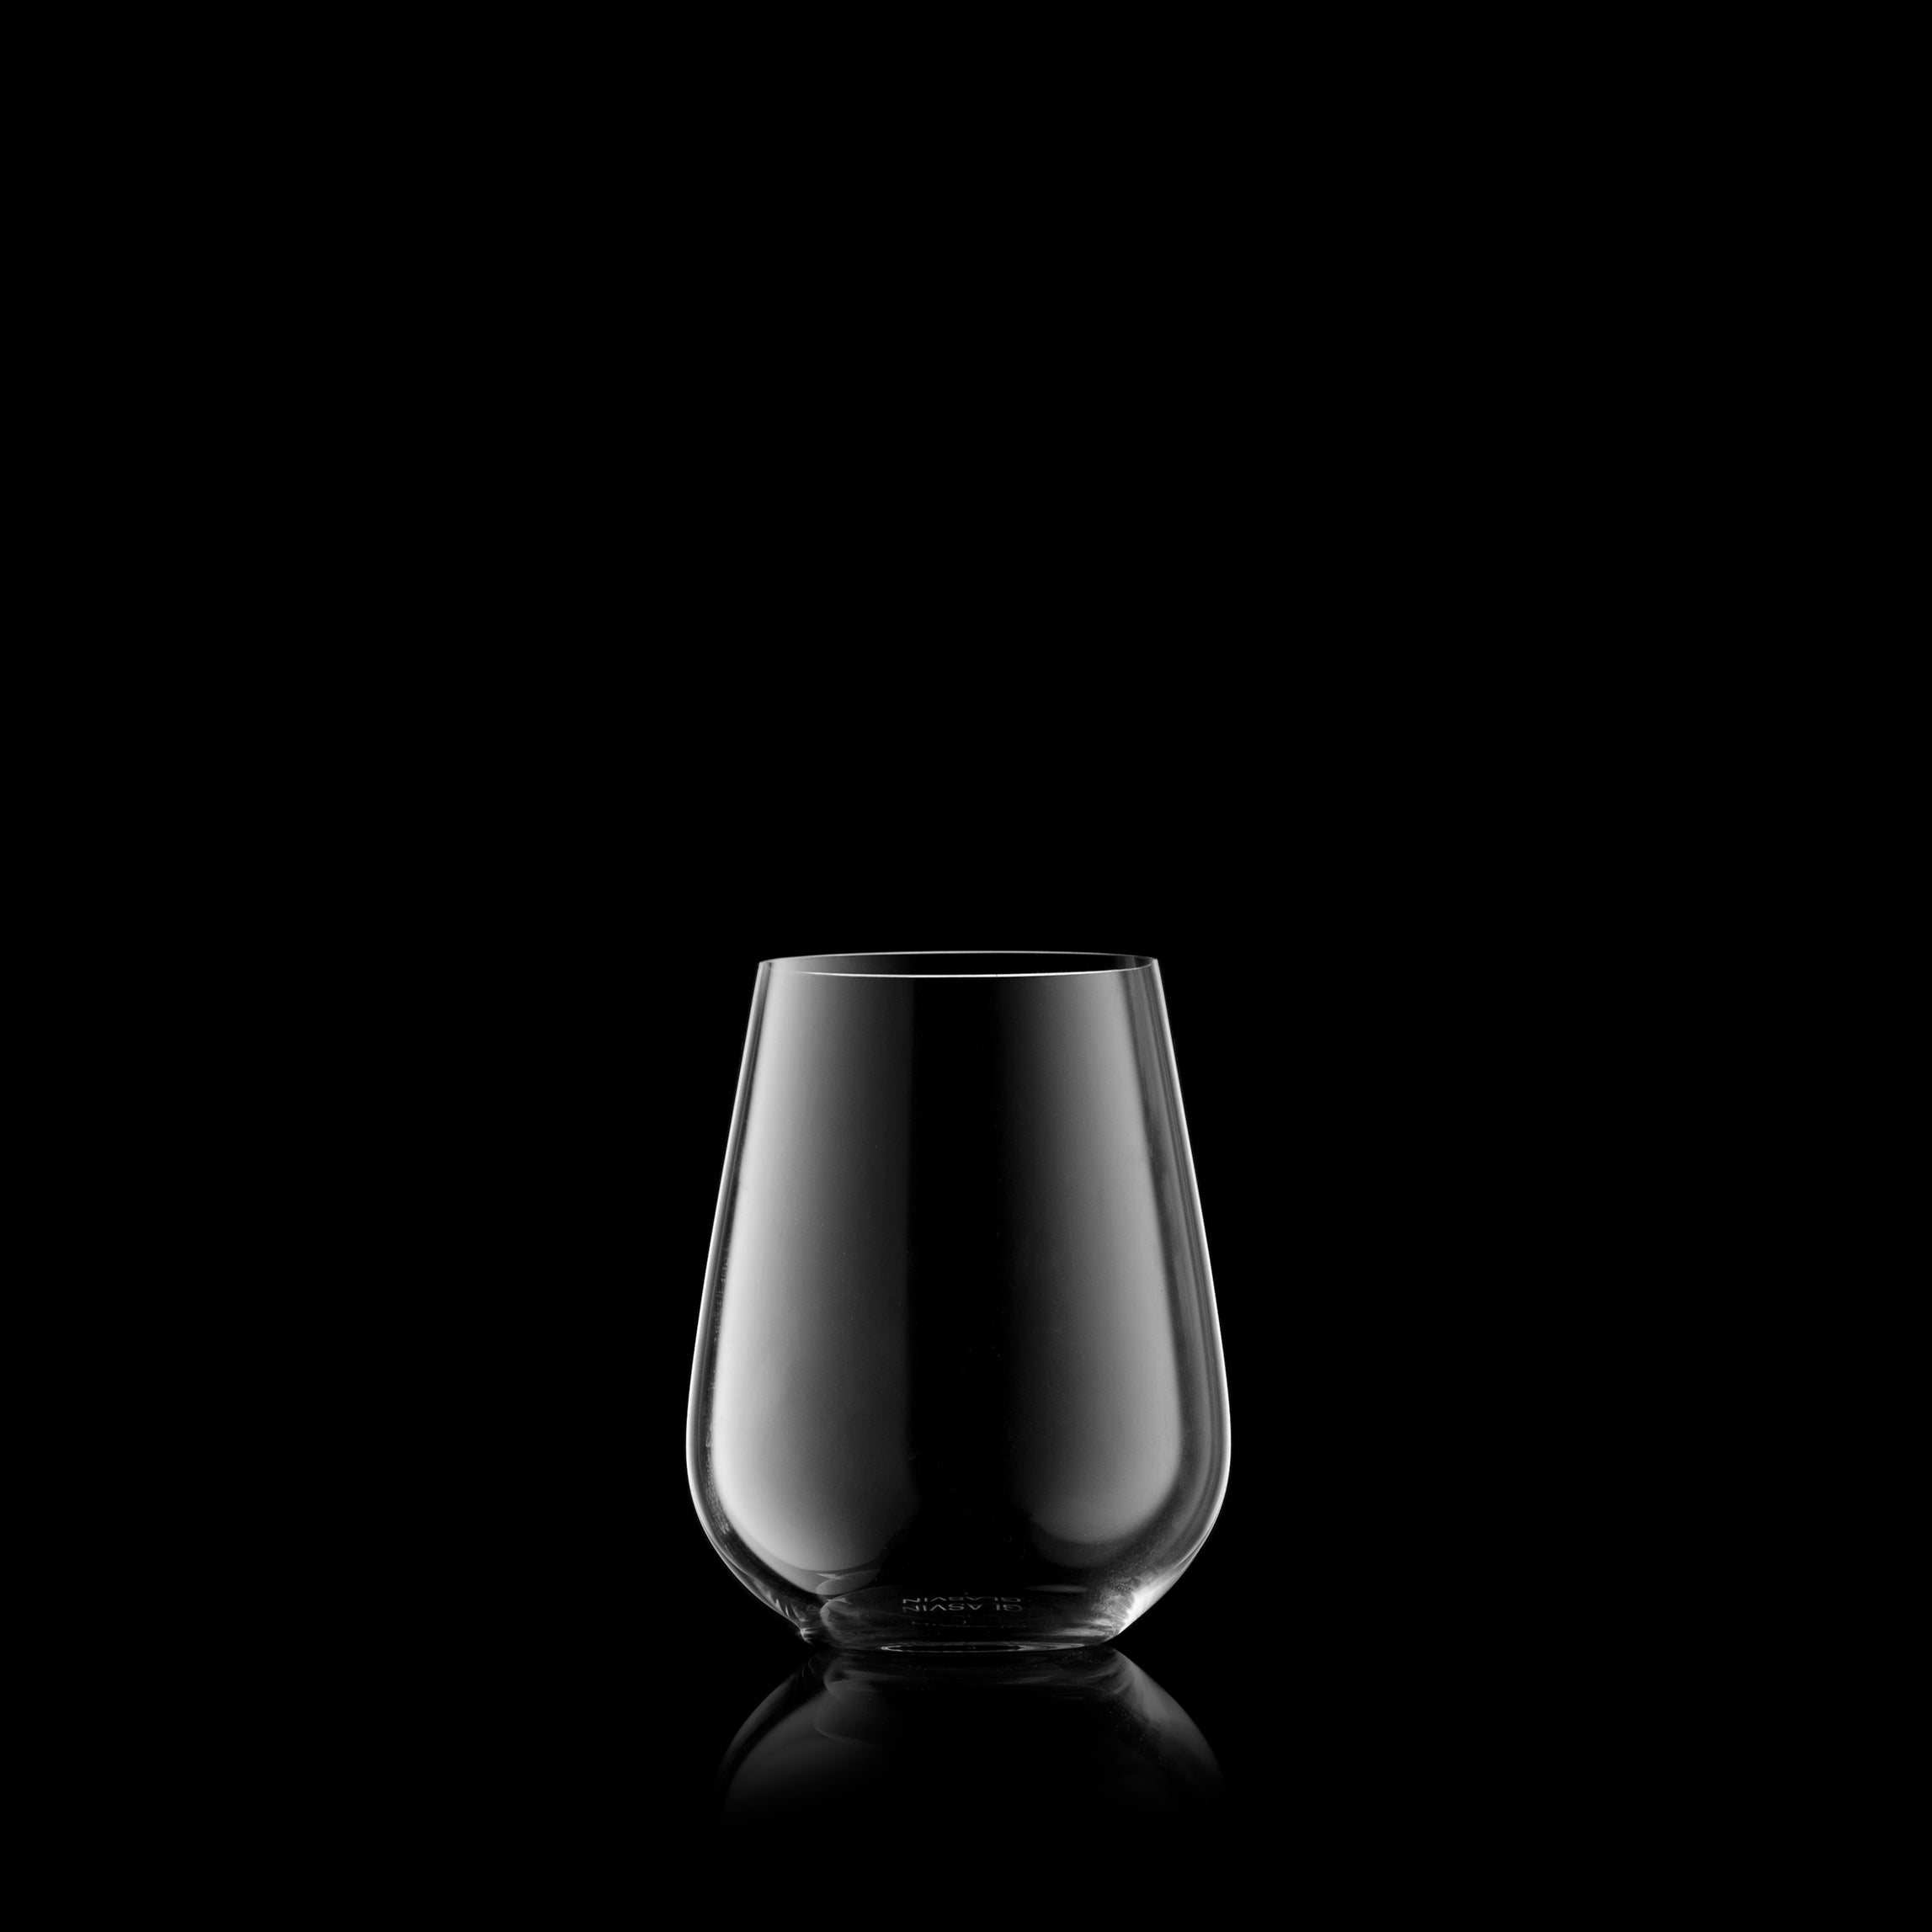 Vinglacé Stainless Steel Stemless Wine Glass